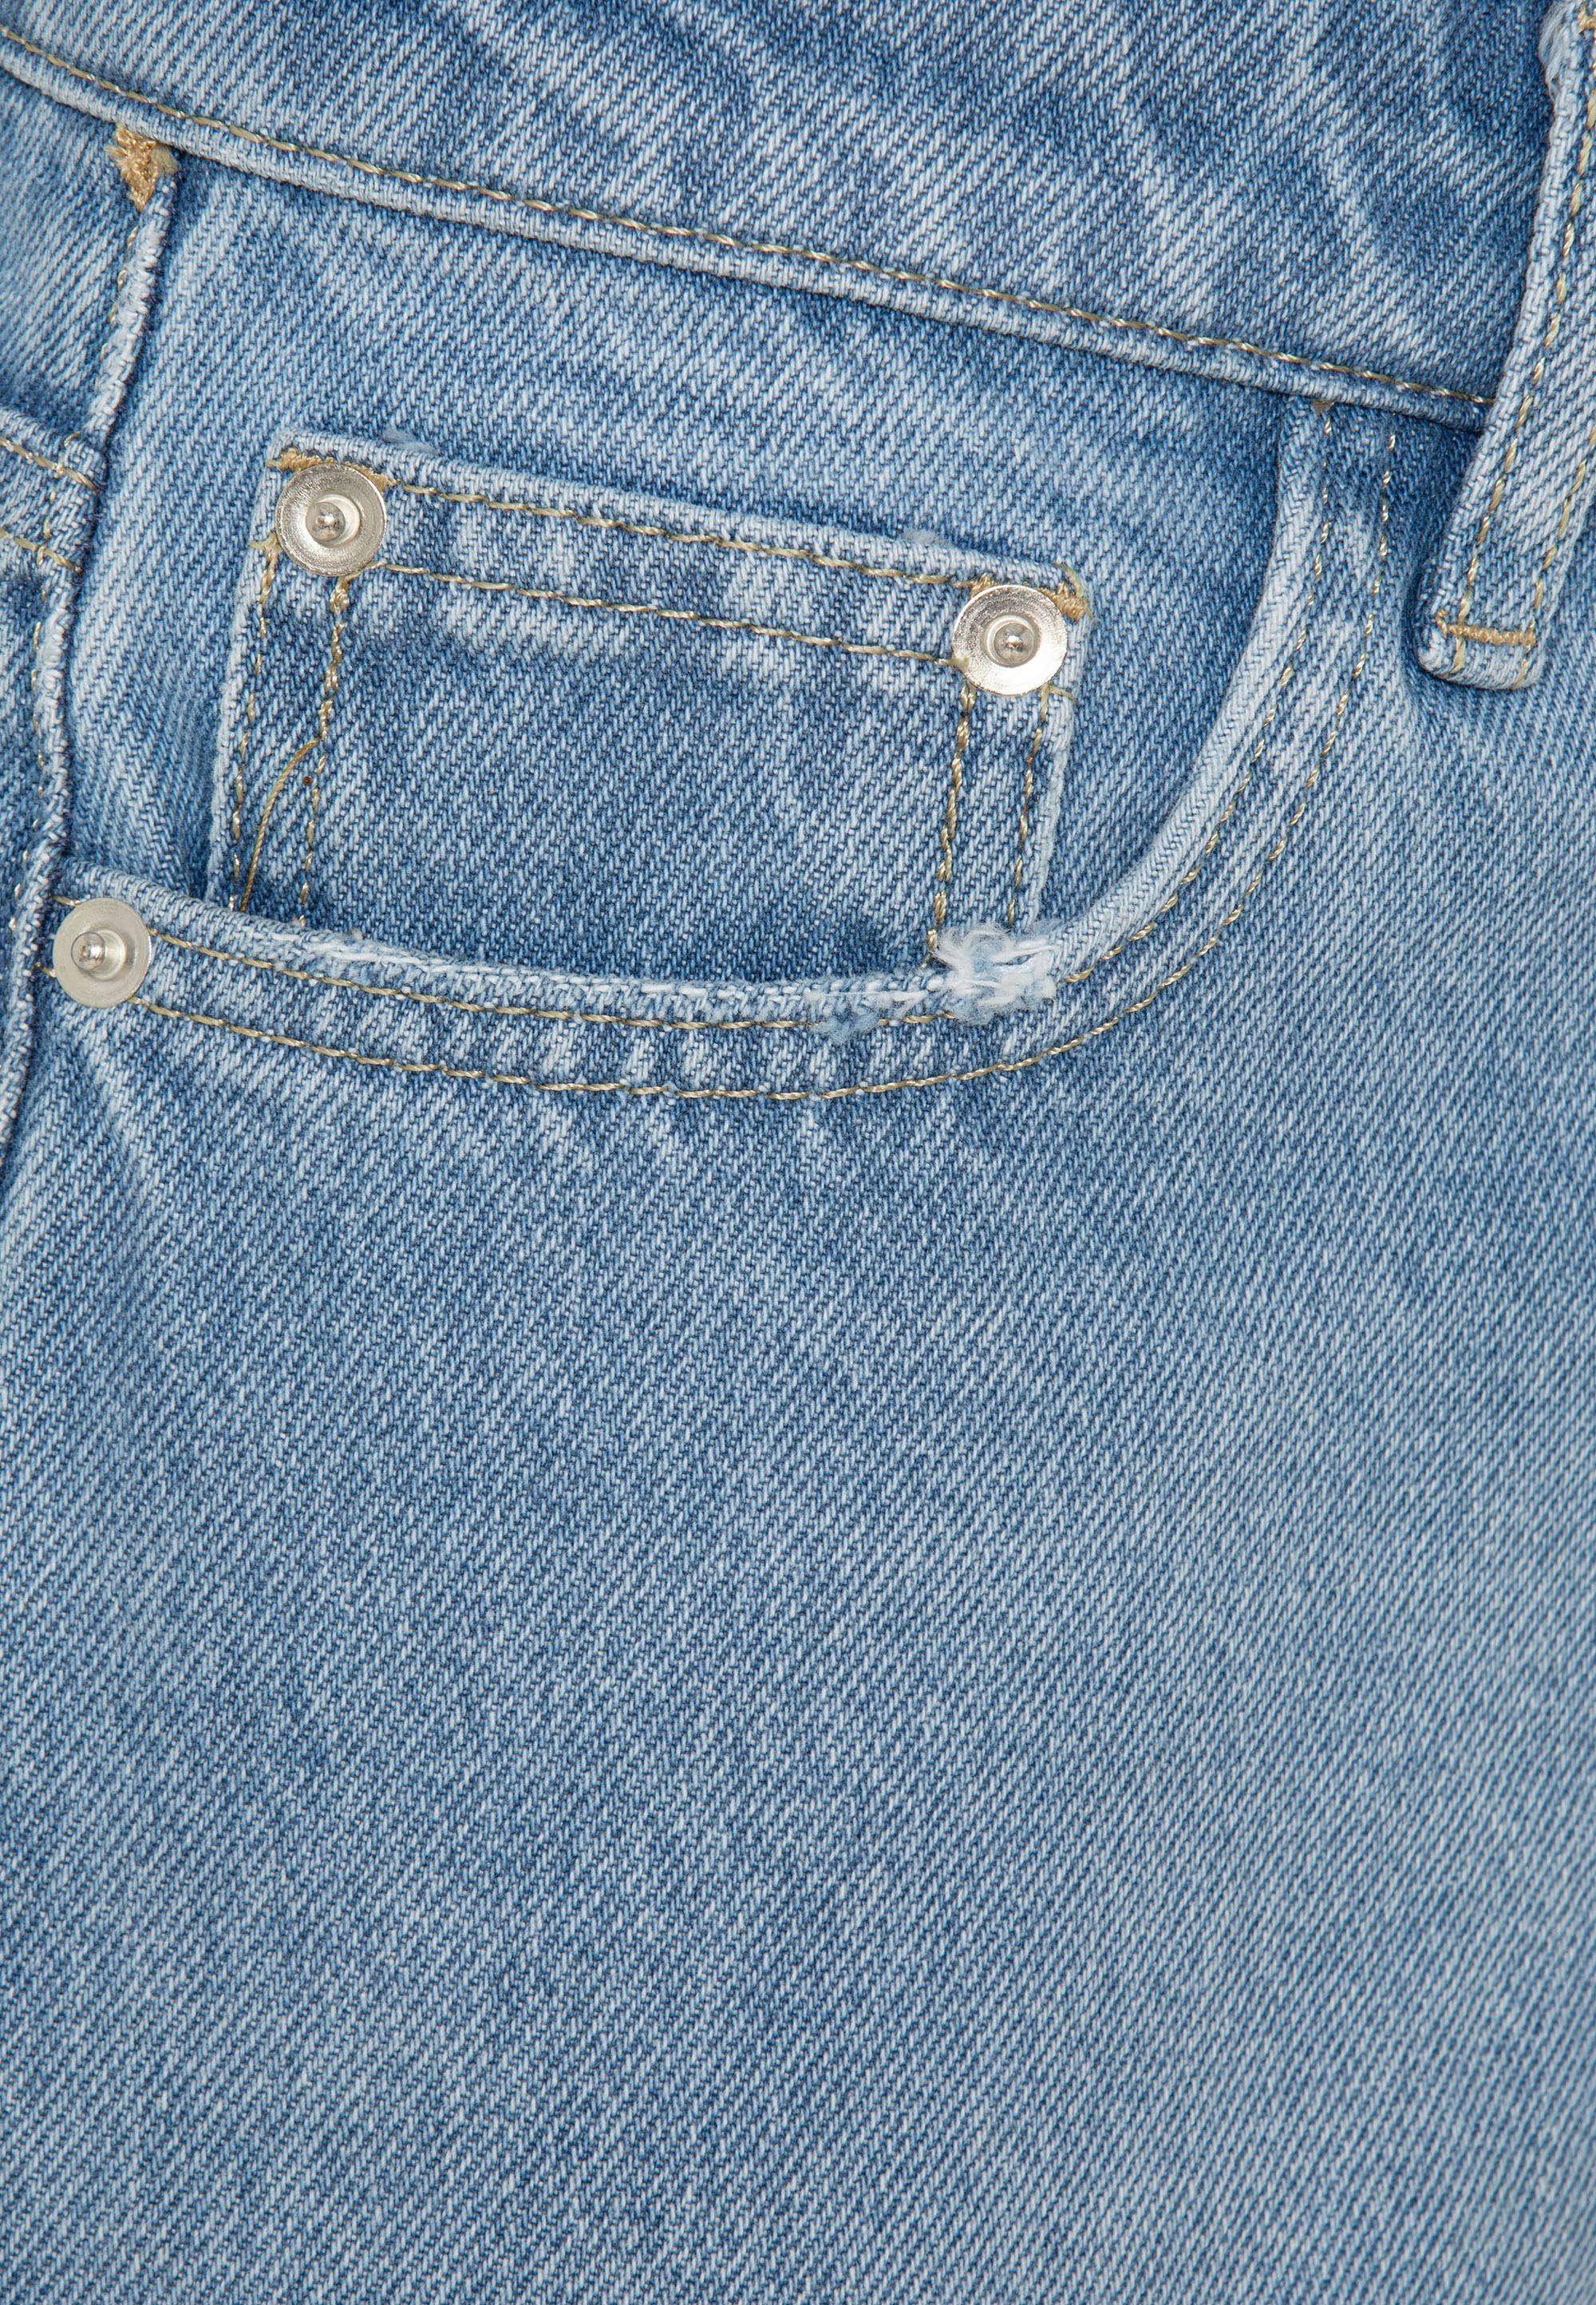 RedBridge Willenhall Shorts mit 5-Pocket-Style klassischem hellblau